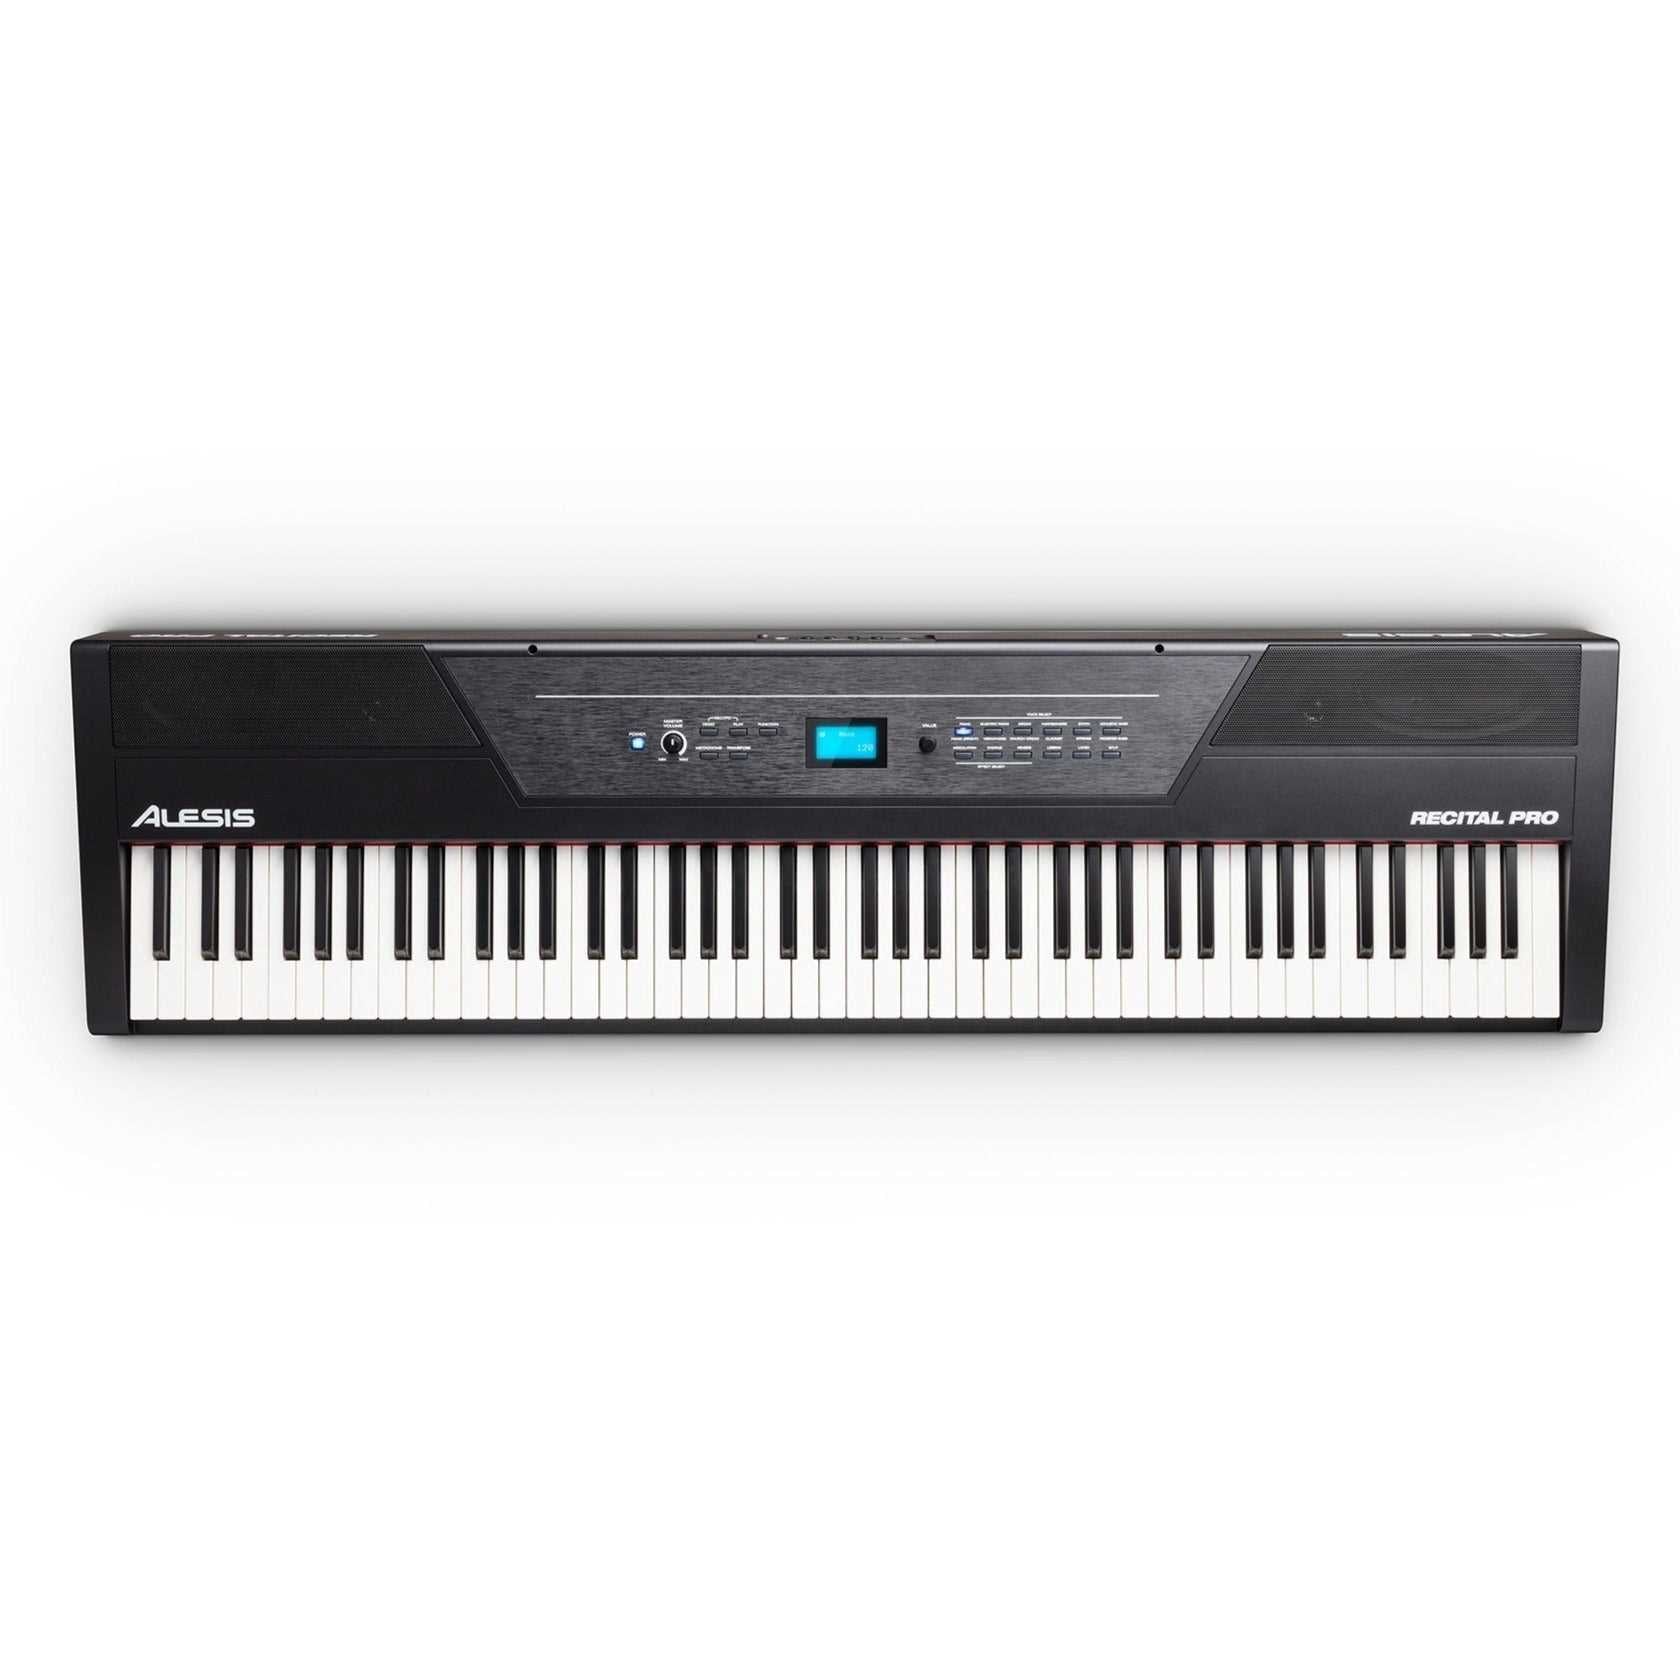 Alesis Recital Pro 88-key Hammer Action Digital Piano | Zoso Music Sdn Bhd